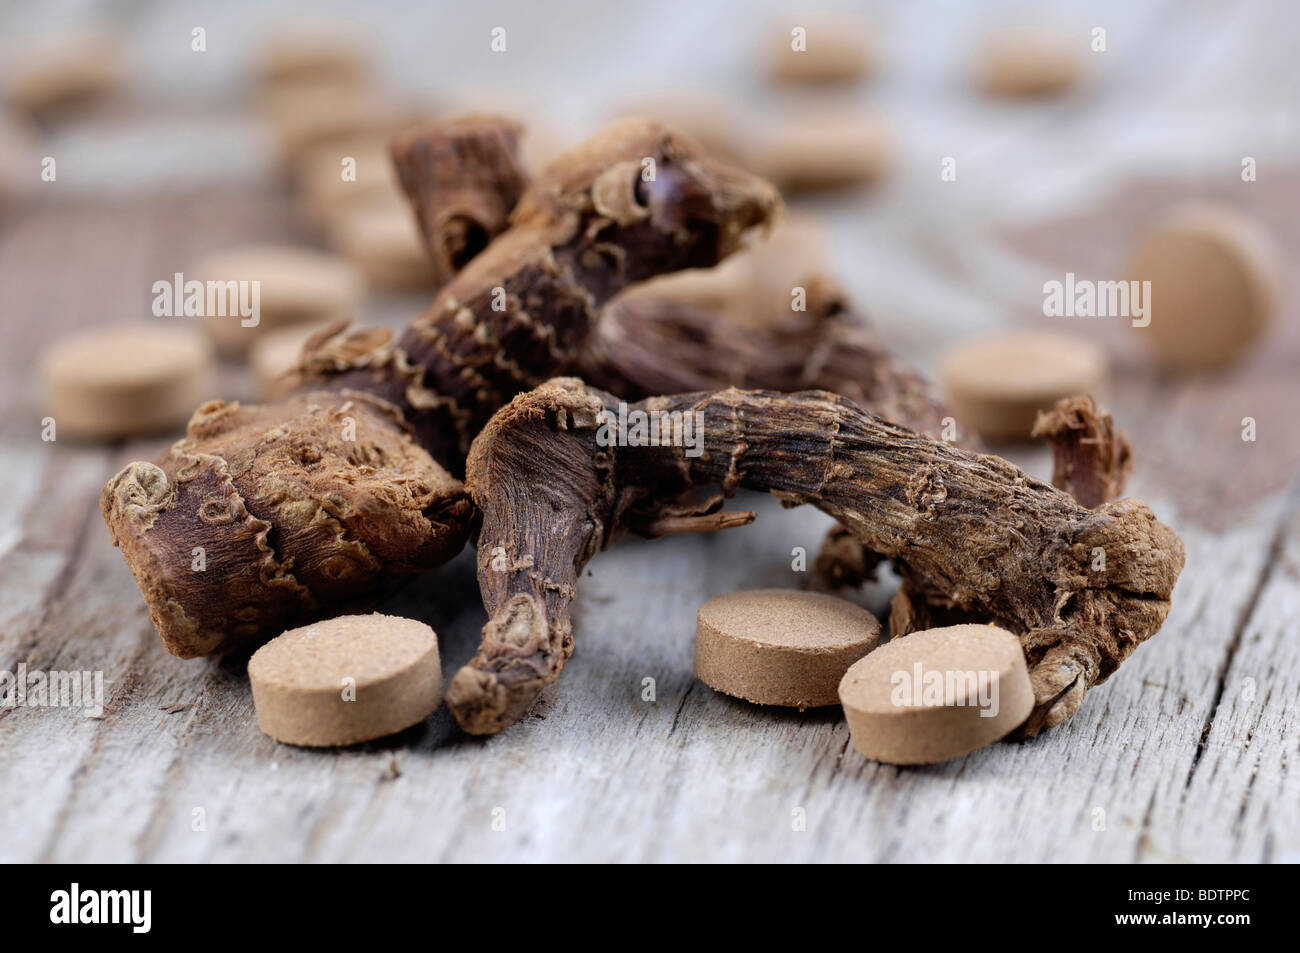 Alpinia galanga condiment pills medicine Stock Photo